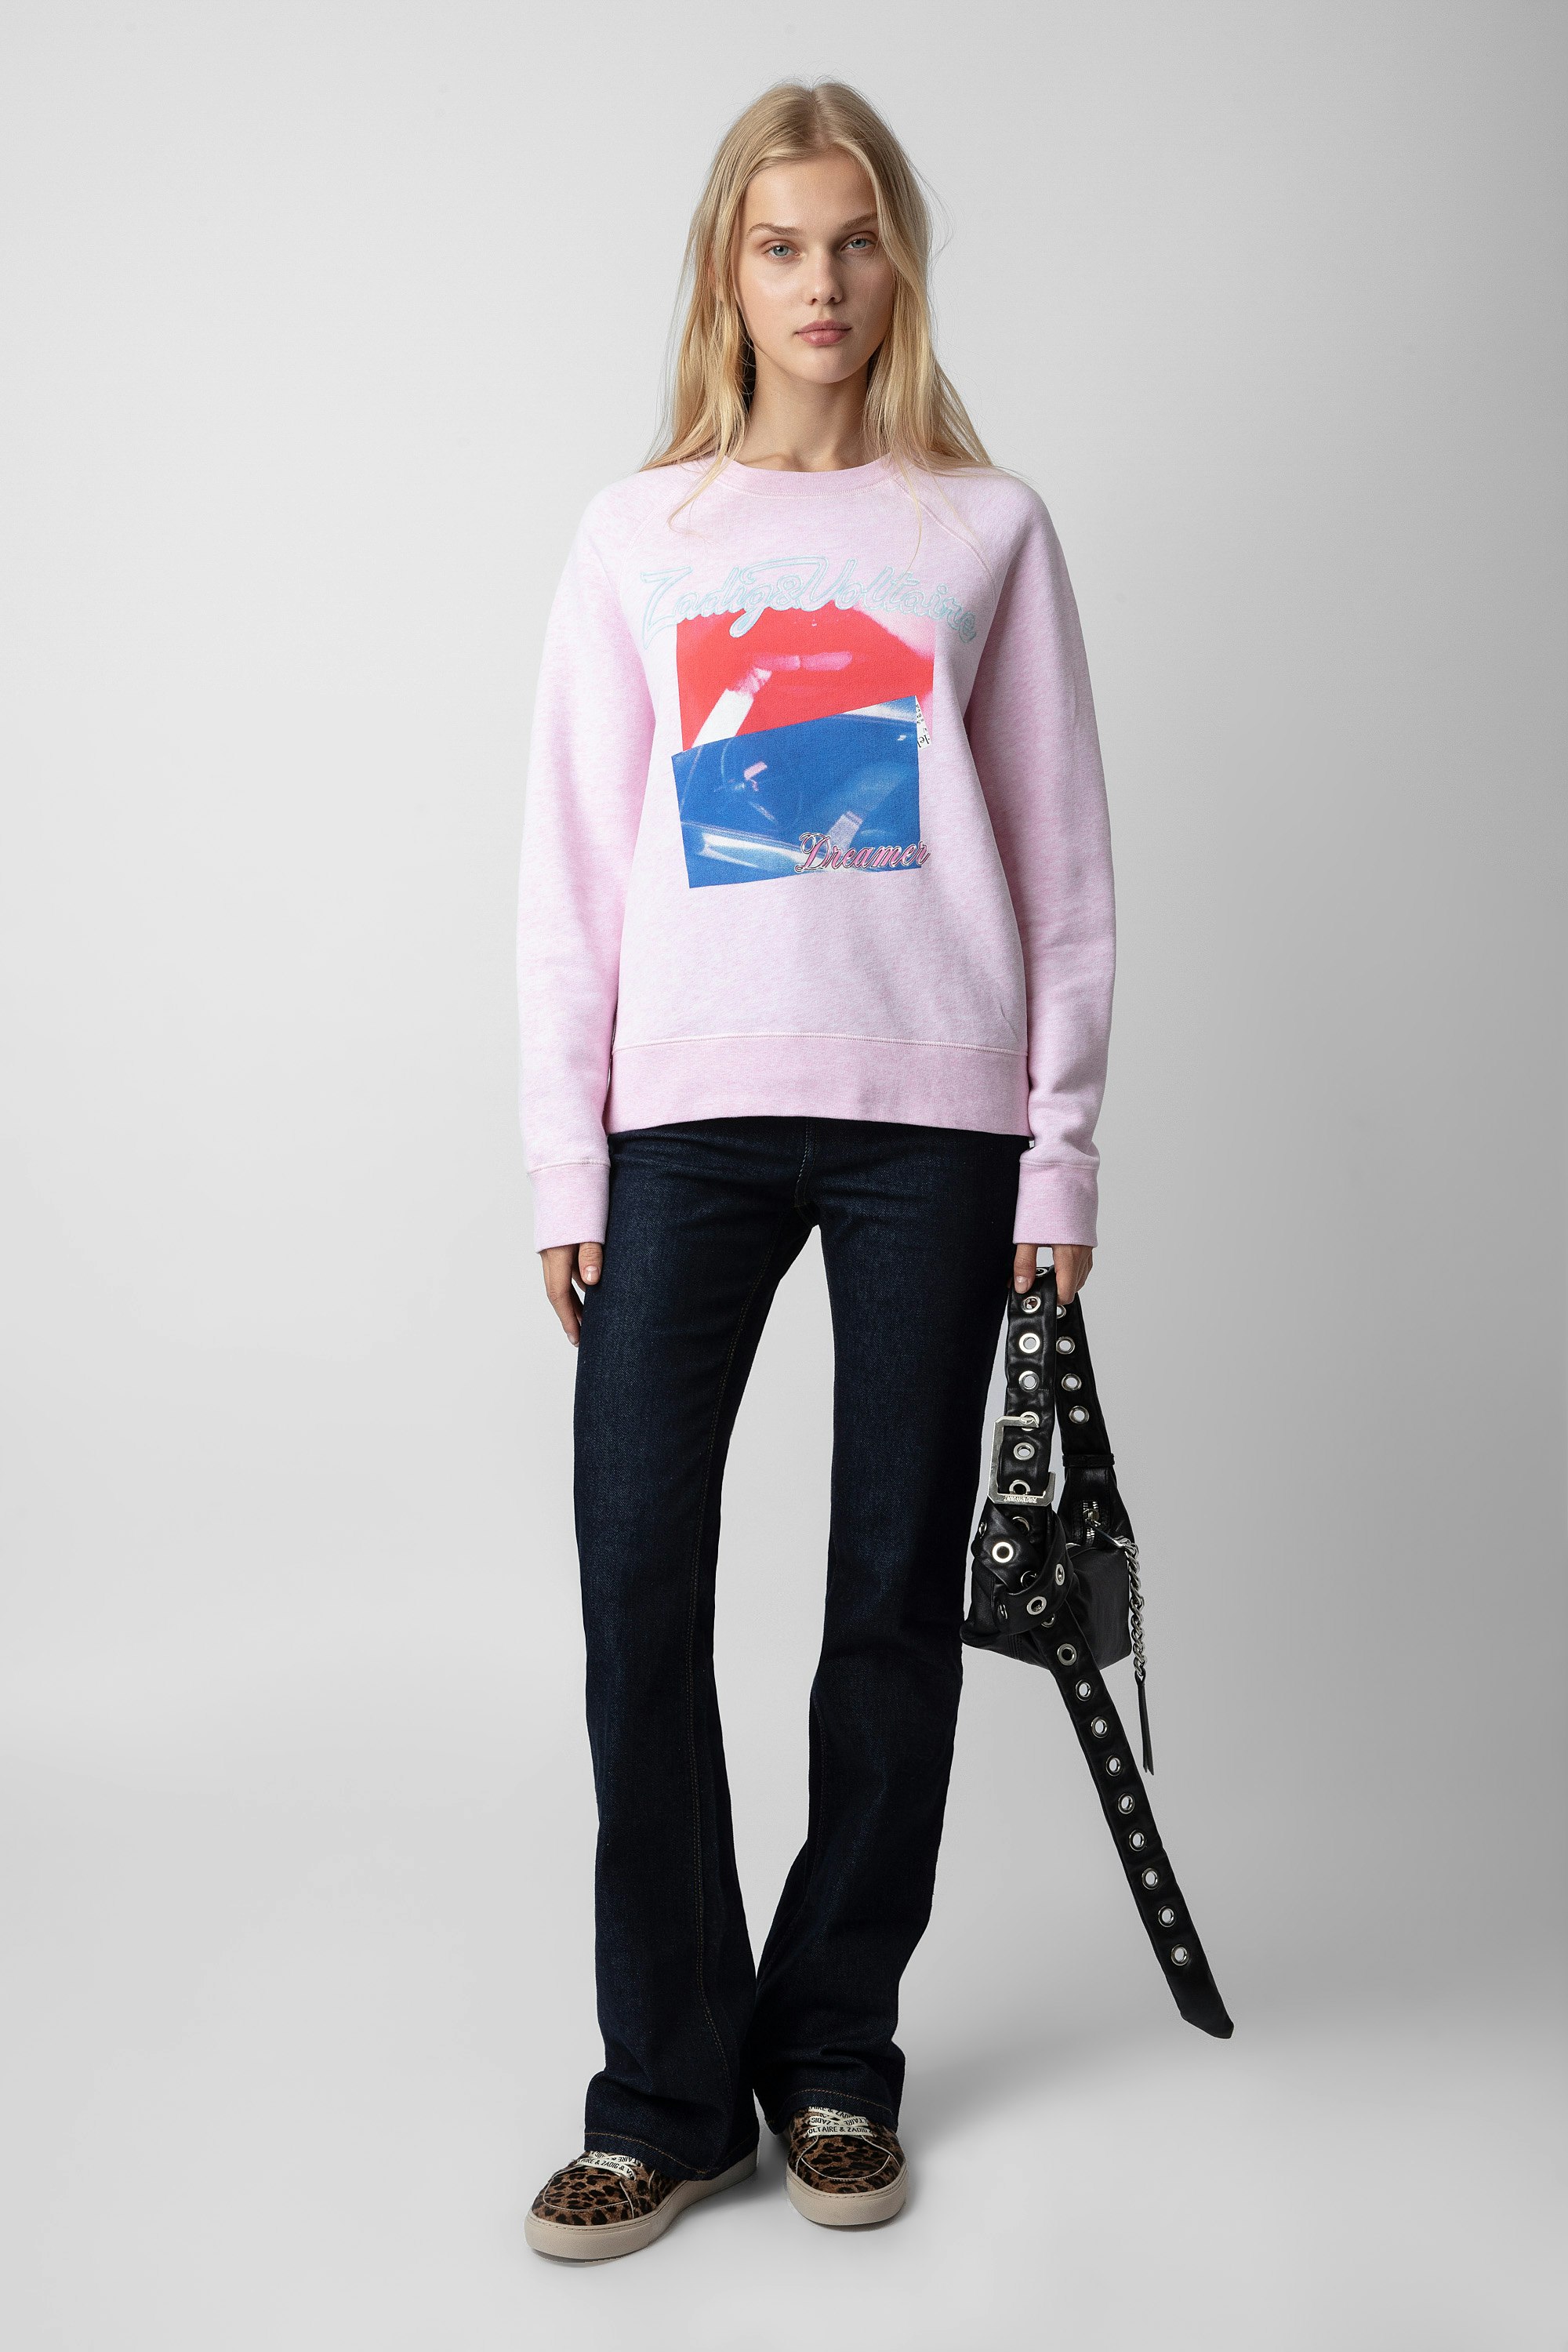 Upper Photoprint Sweatshirt - Women’s pink sweatshirt with photoprint on the front.